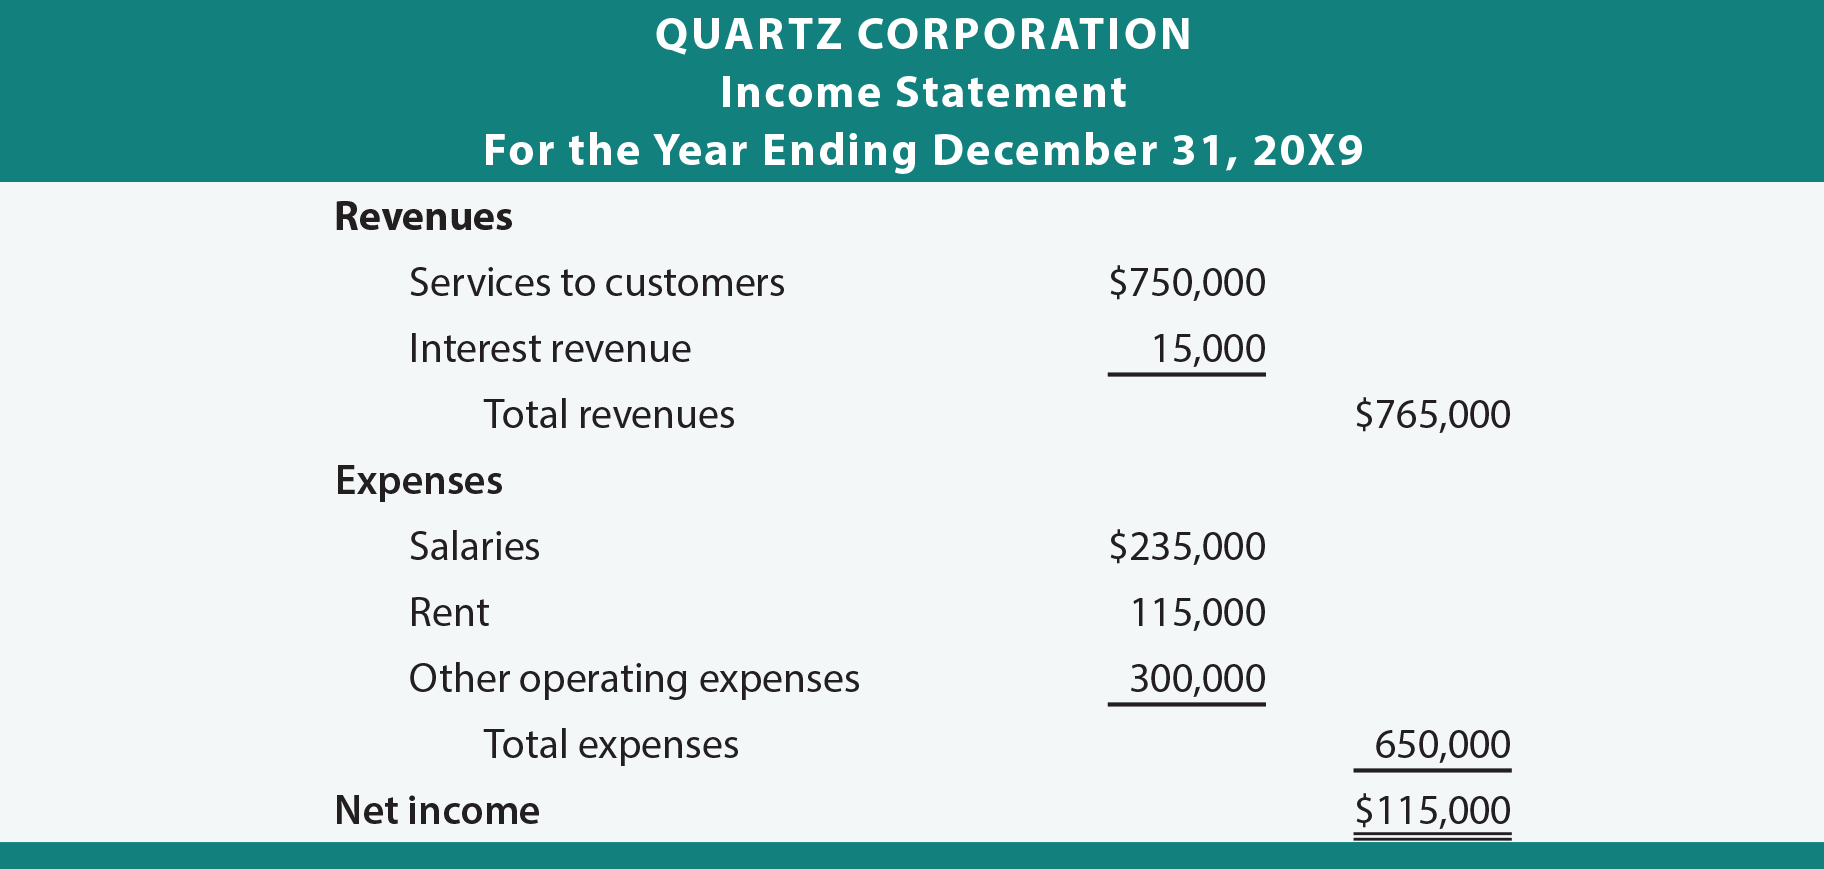 Quartz Corporation Income Statement